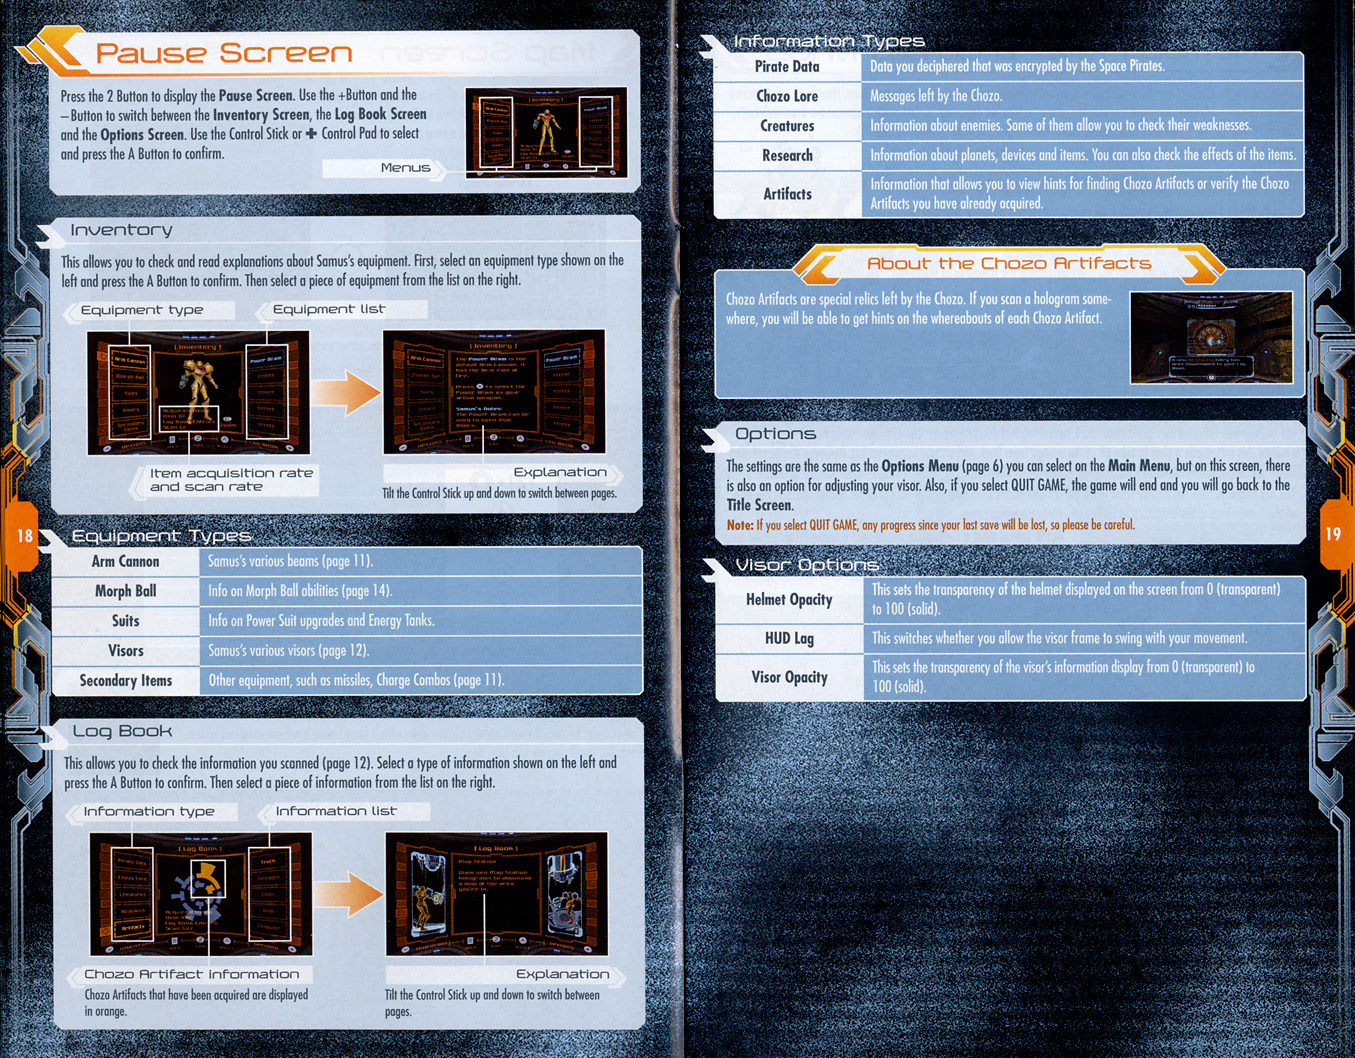 Metroid Prime Trilogy instruction manual